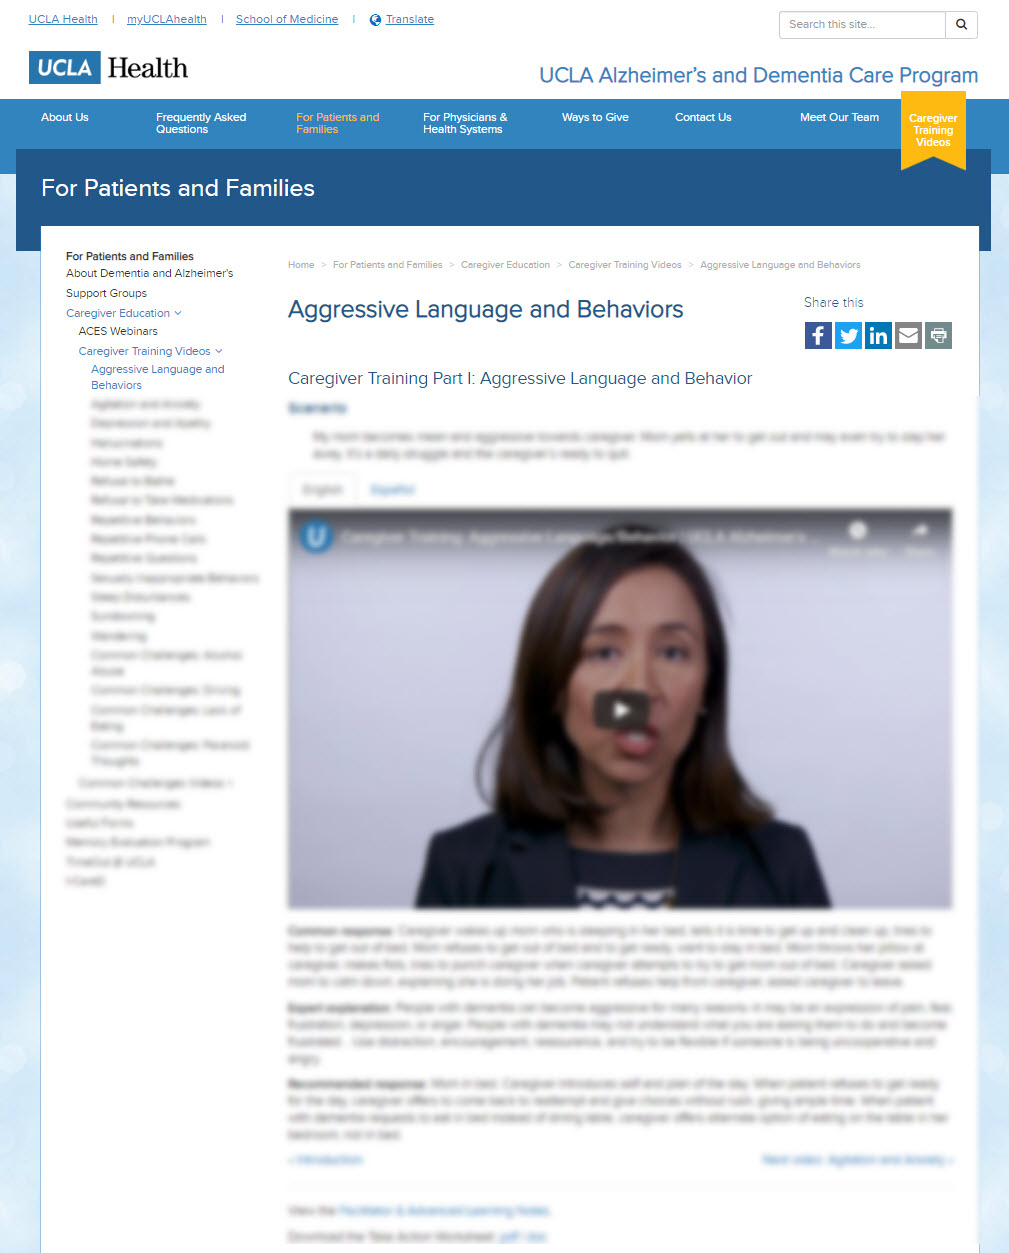 Aggressive Language and Behaviors